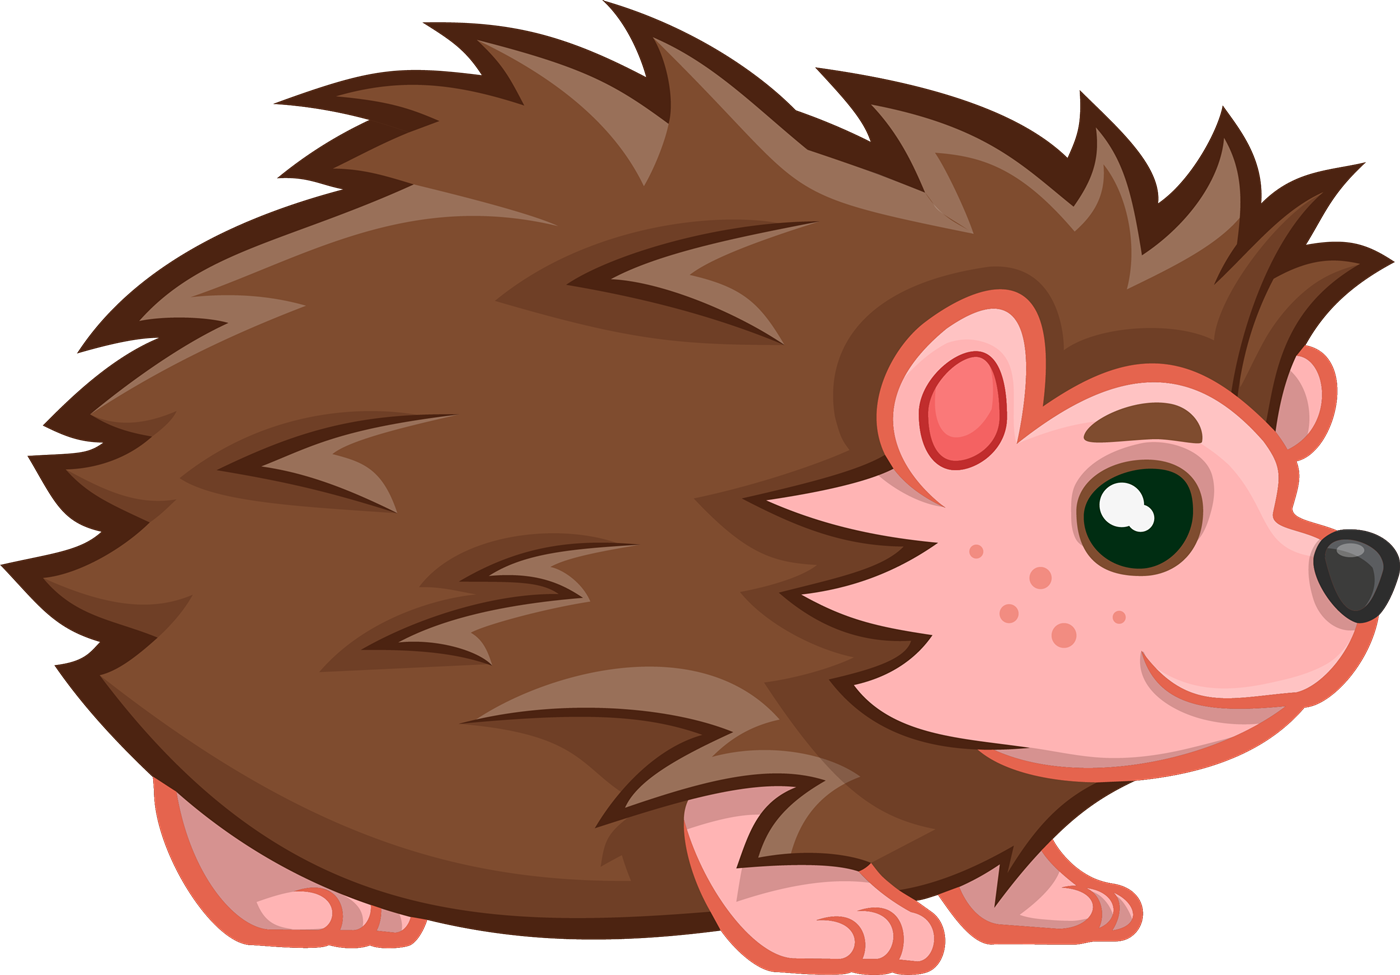 Cute hedgehog clipart clipartfest - Clip Art Library